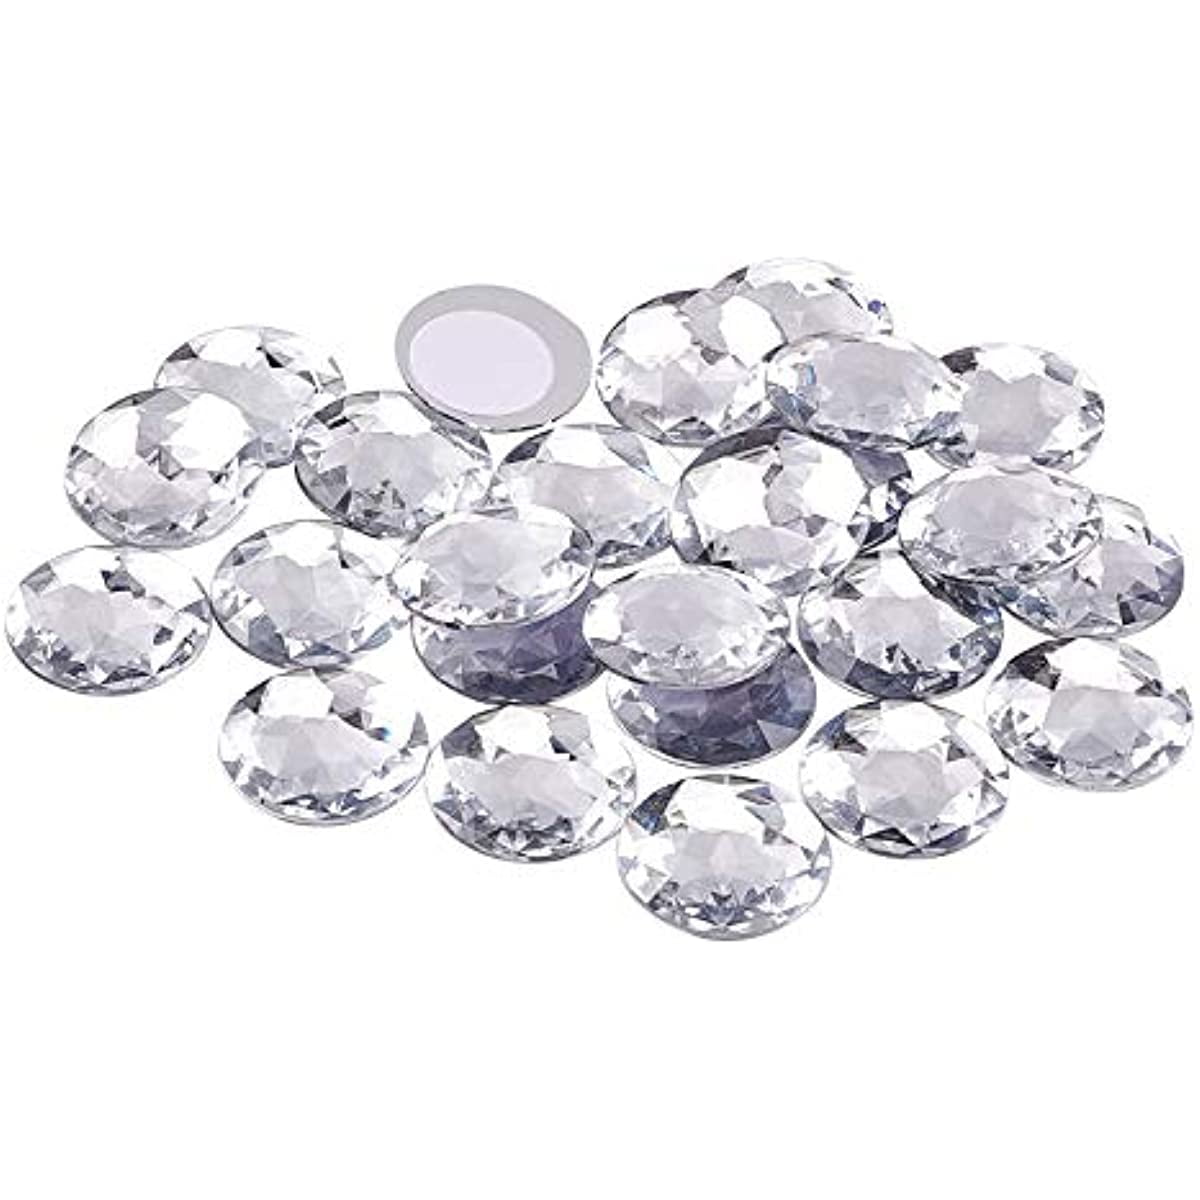 150 Pcs HINZIC Crystal Rhinestones 25mm Round Clear Acrylic Gemstones Glitter Gems Large Diamonds for Jewelry Making Wedding Cosplay Embelishments